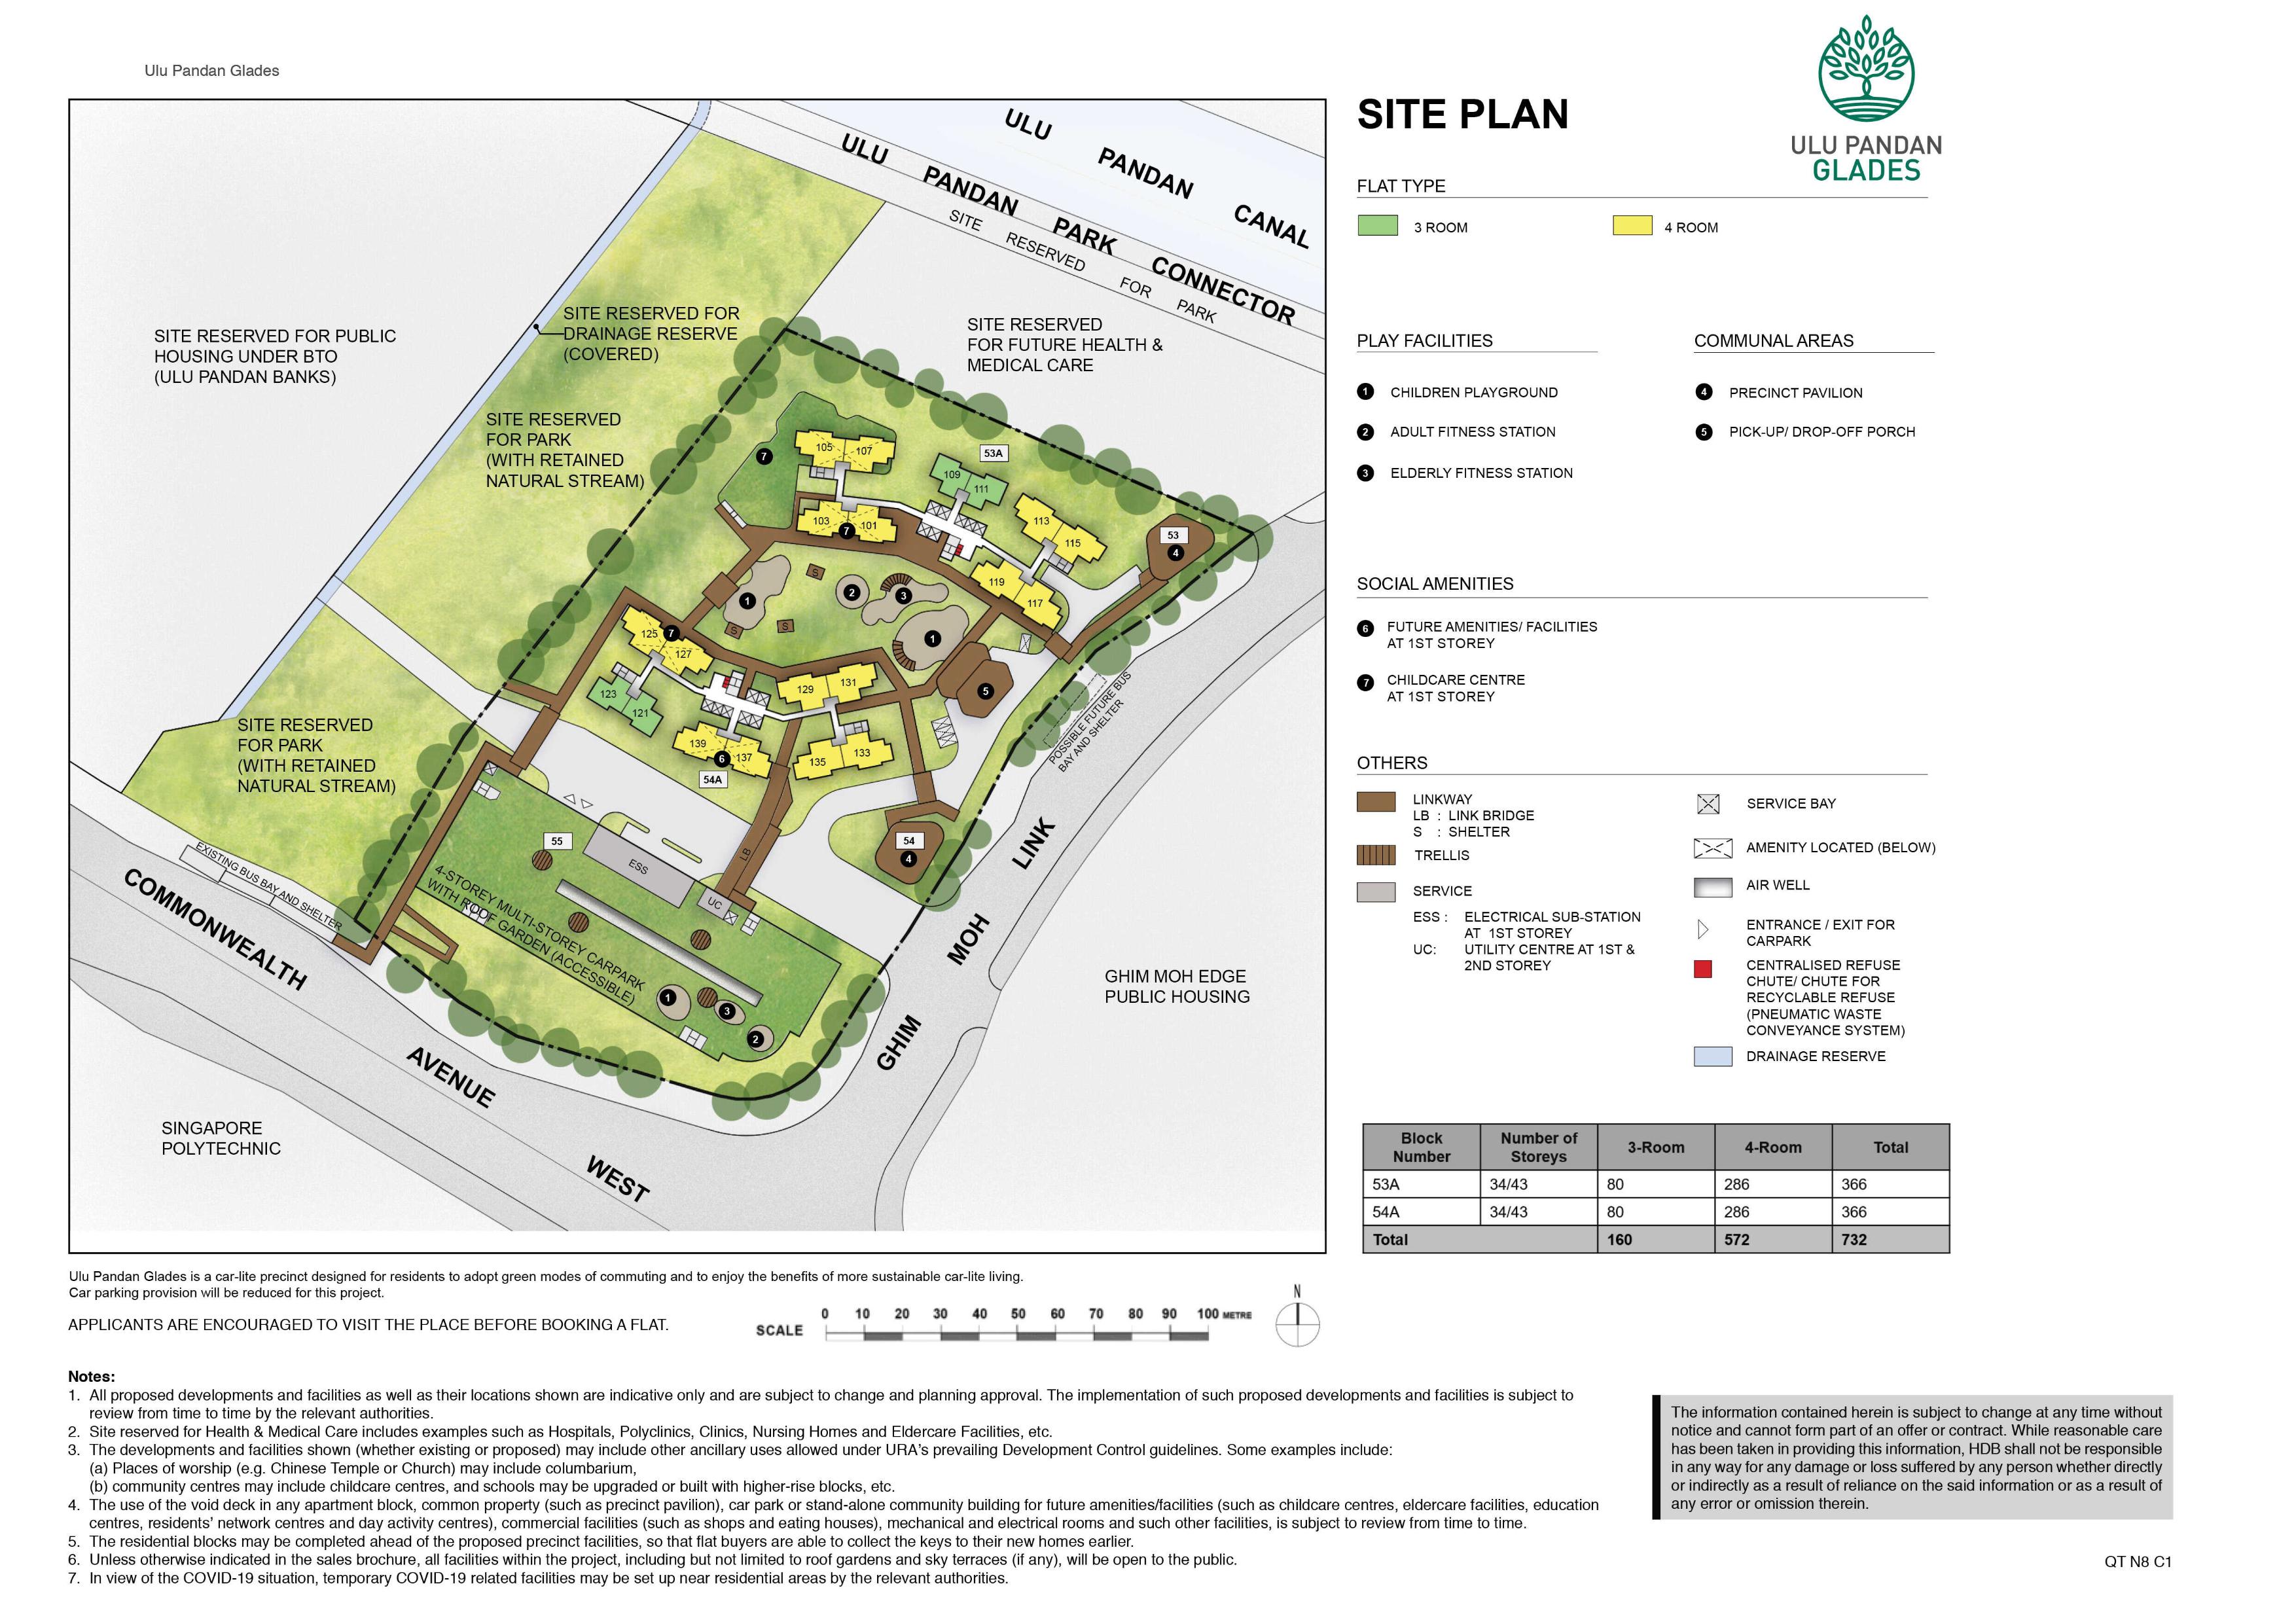 Ulu Pandan Glades Site Plan